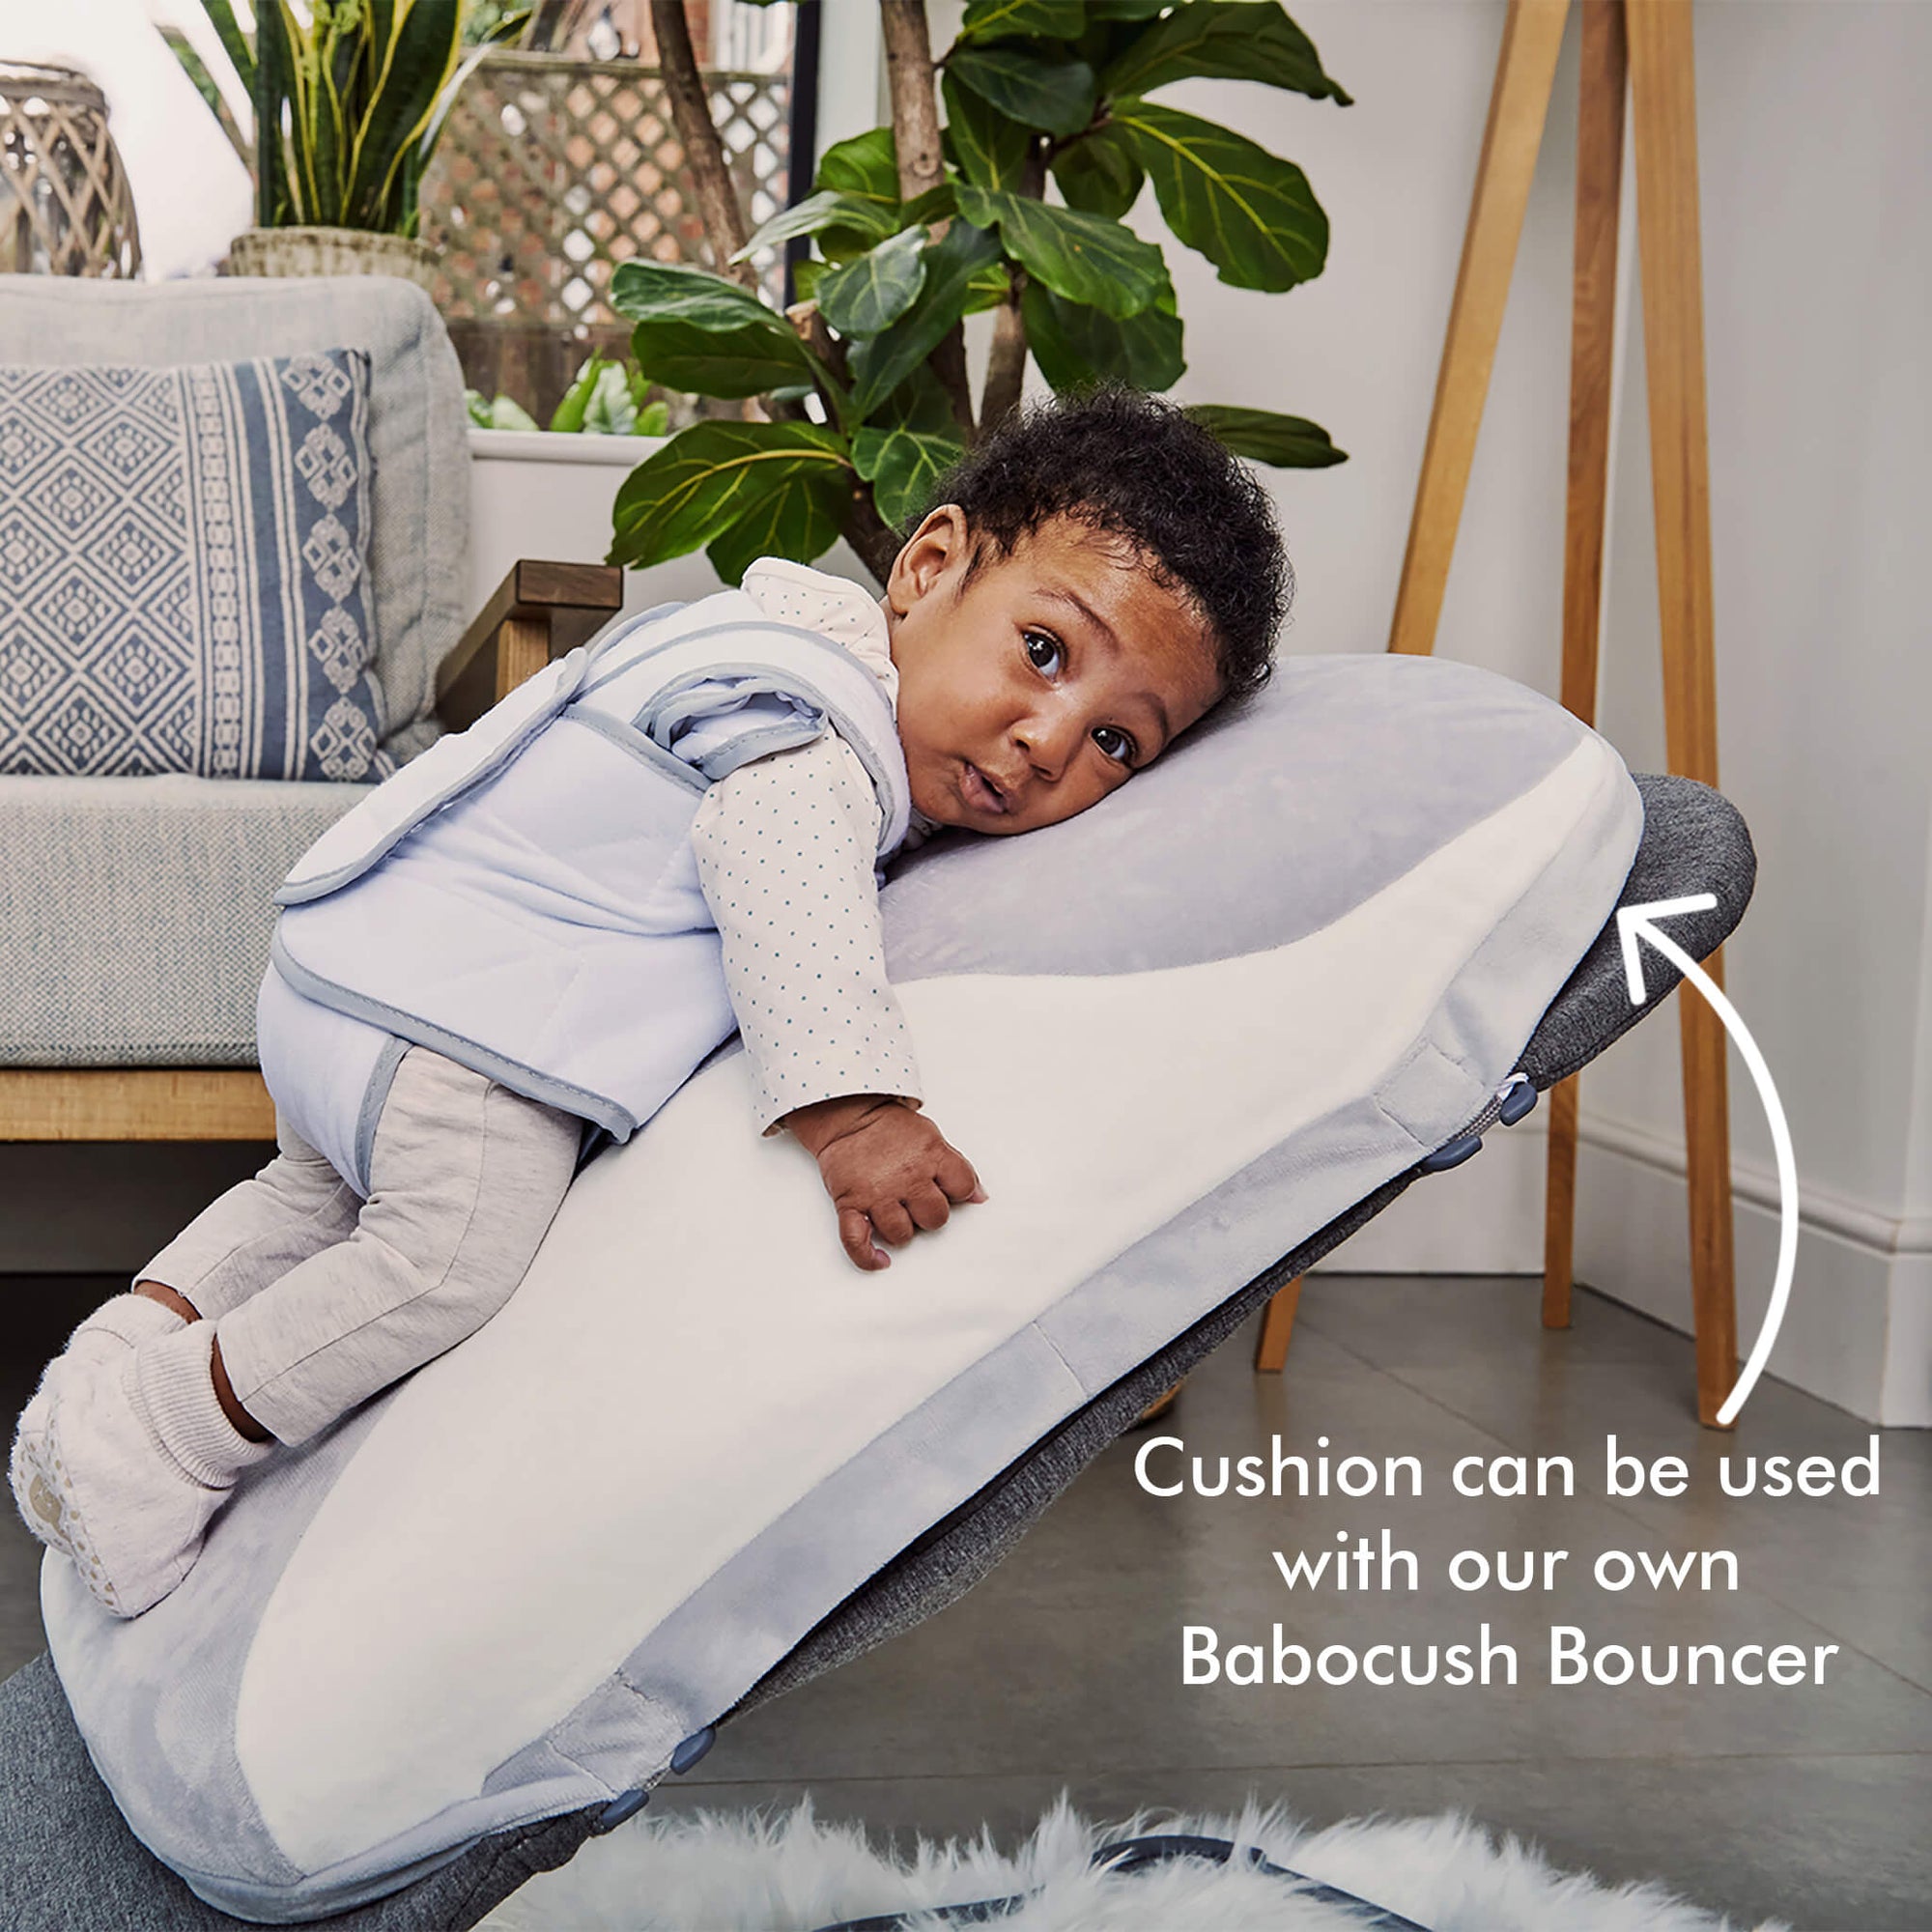 Babocush cushion used with baby bouncer